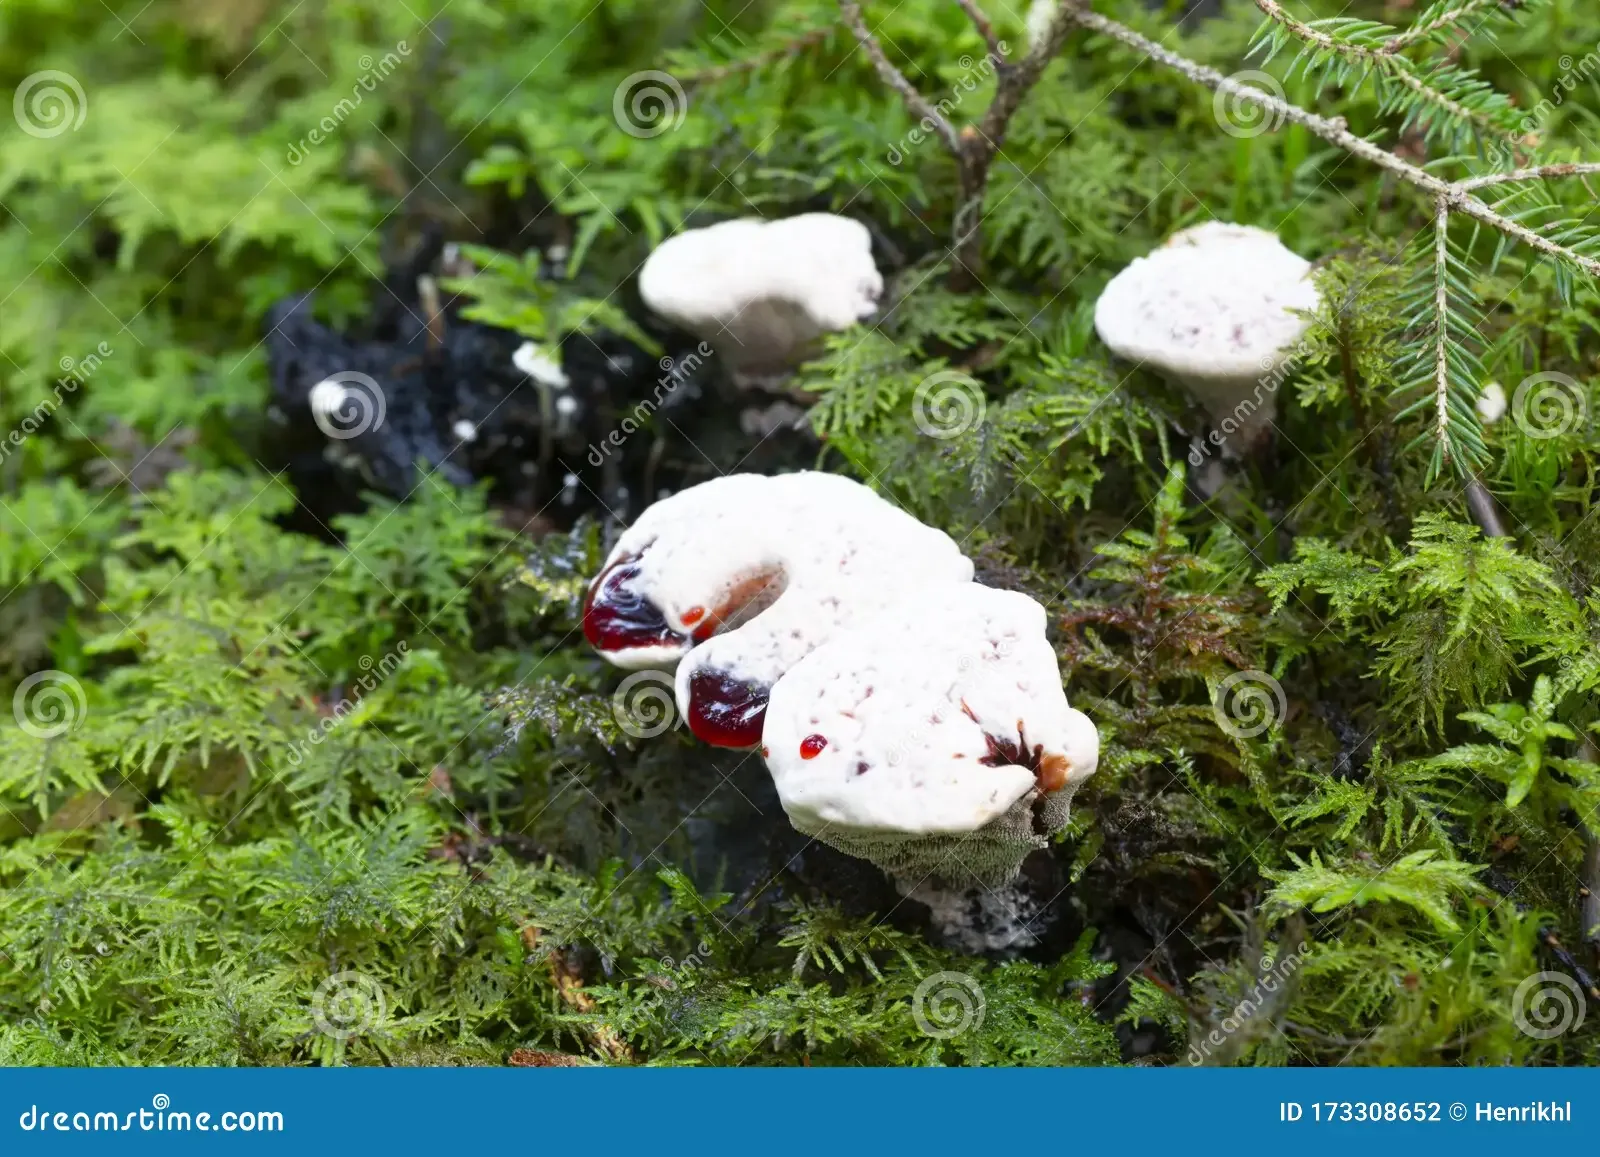 closeup-bleeding-tooth-fungus-hydnellum-peckii-growing-moss-bleeding-tooth-fungus-hydnellum-peckii-growing-moss-173308652.jpg